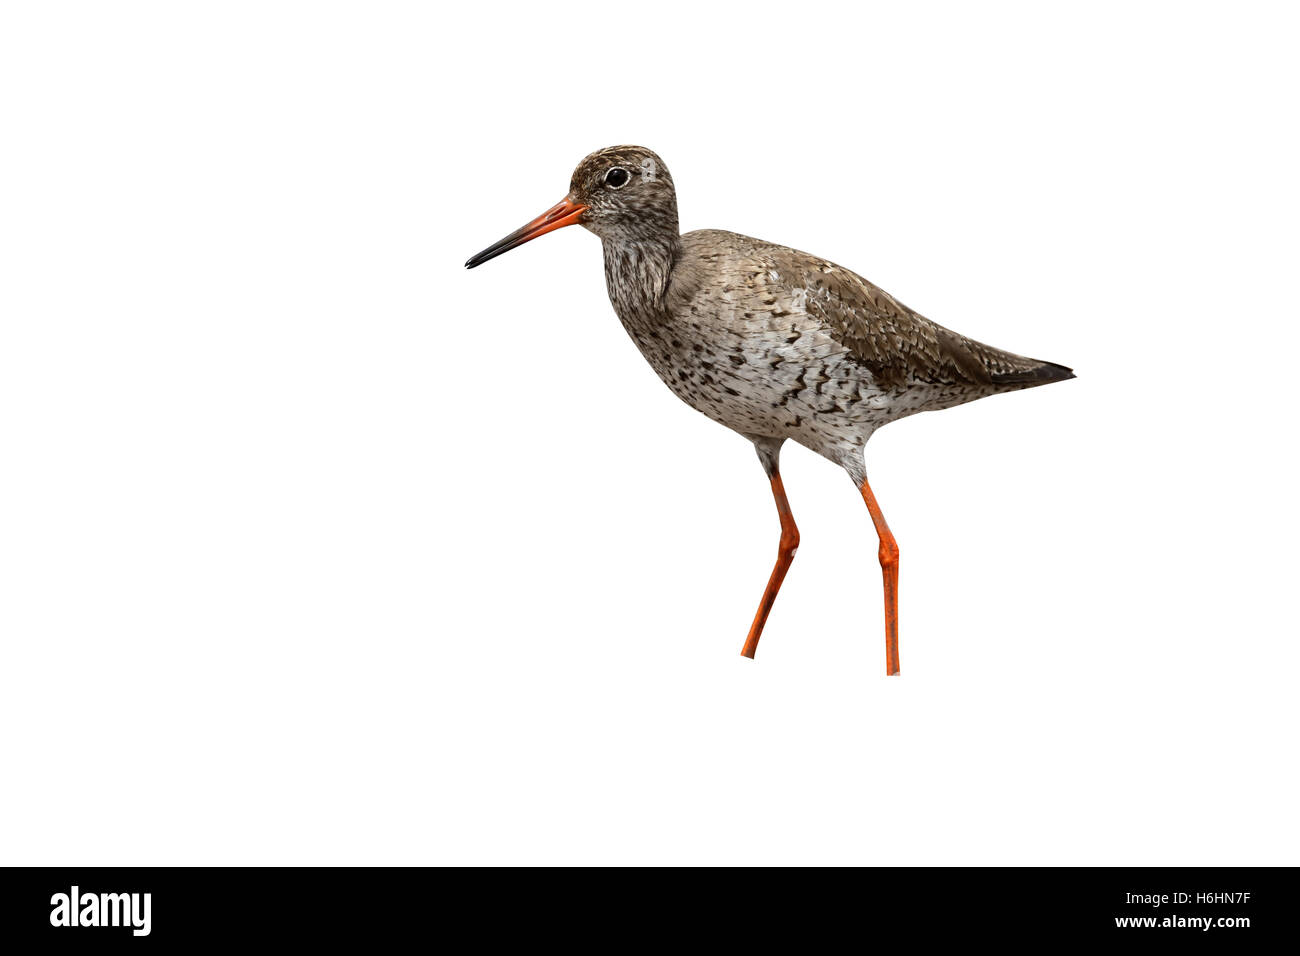 Redshank, Tringa totanus, singolo uccello da acqua, Warwickshire, Giugno 2015 Foto Stock